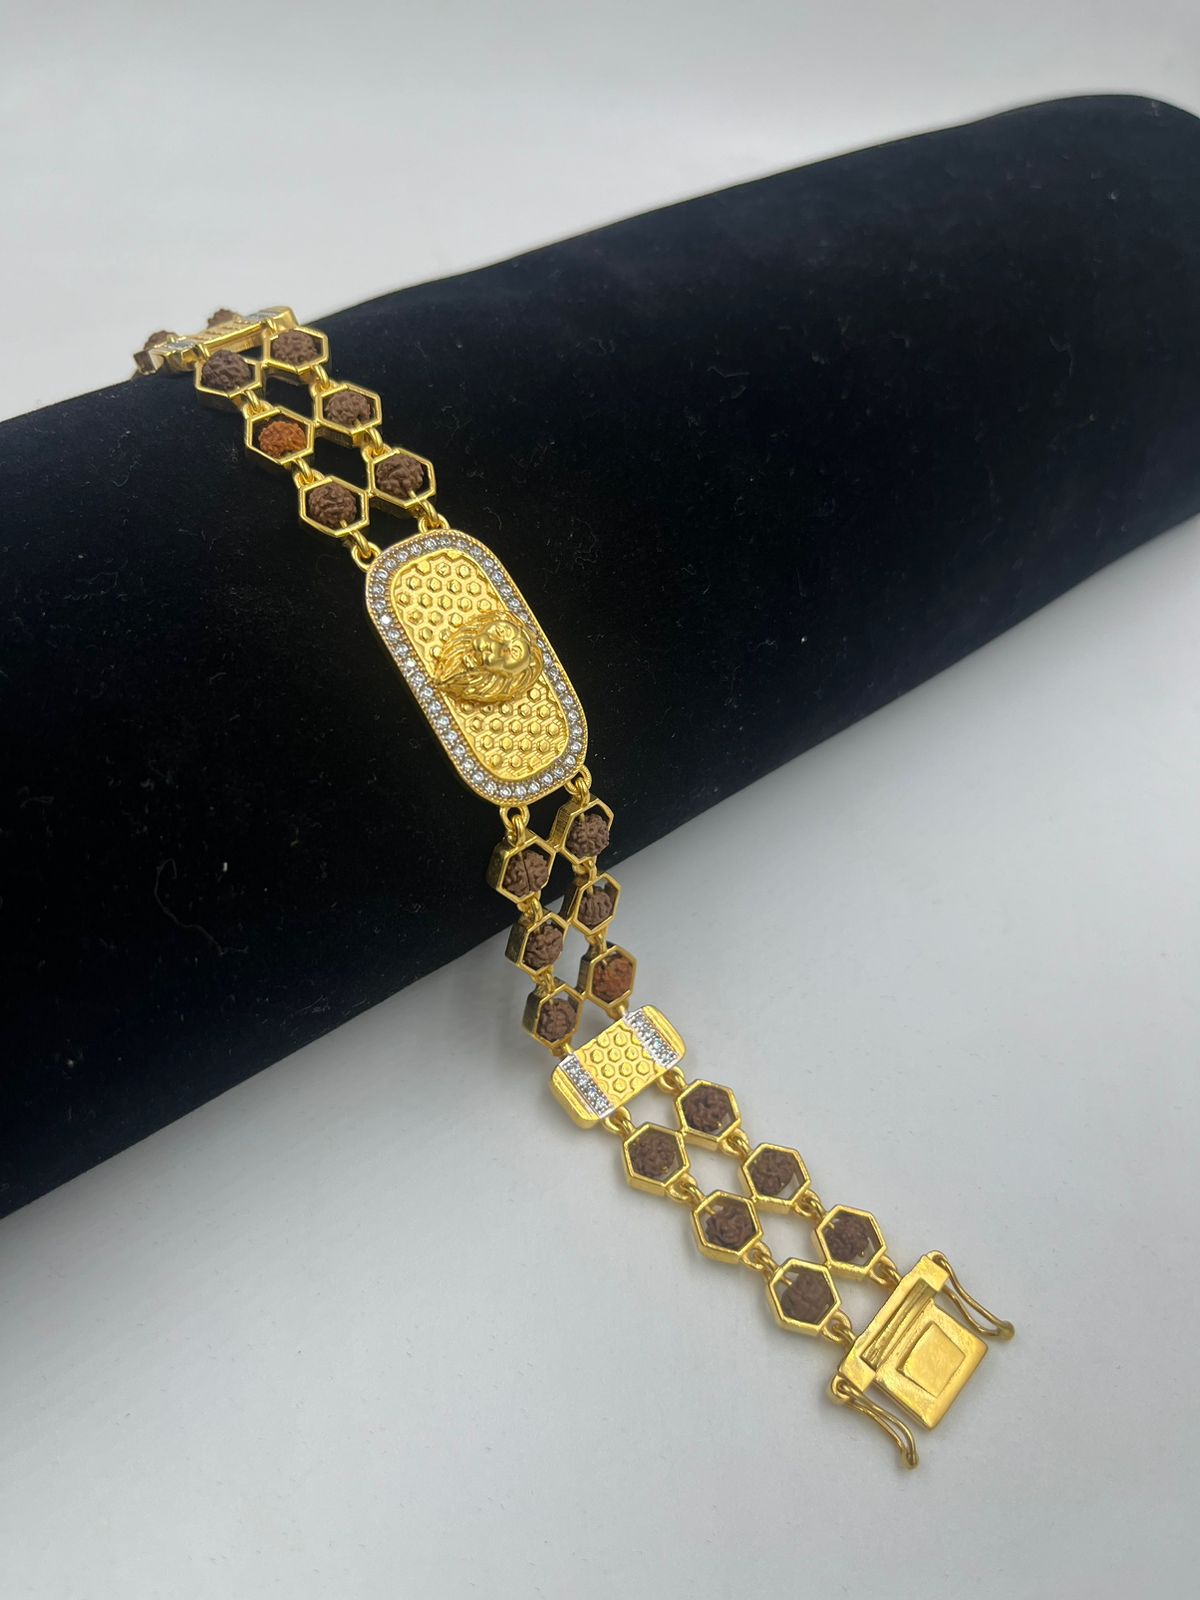 1 Gram Gold Plated With Diamond Funky Design Rudraksha Bracelet For Men -  Style C857 at Rs 4560.00 | Gold Plated Bracelet | ID: 2852715699788